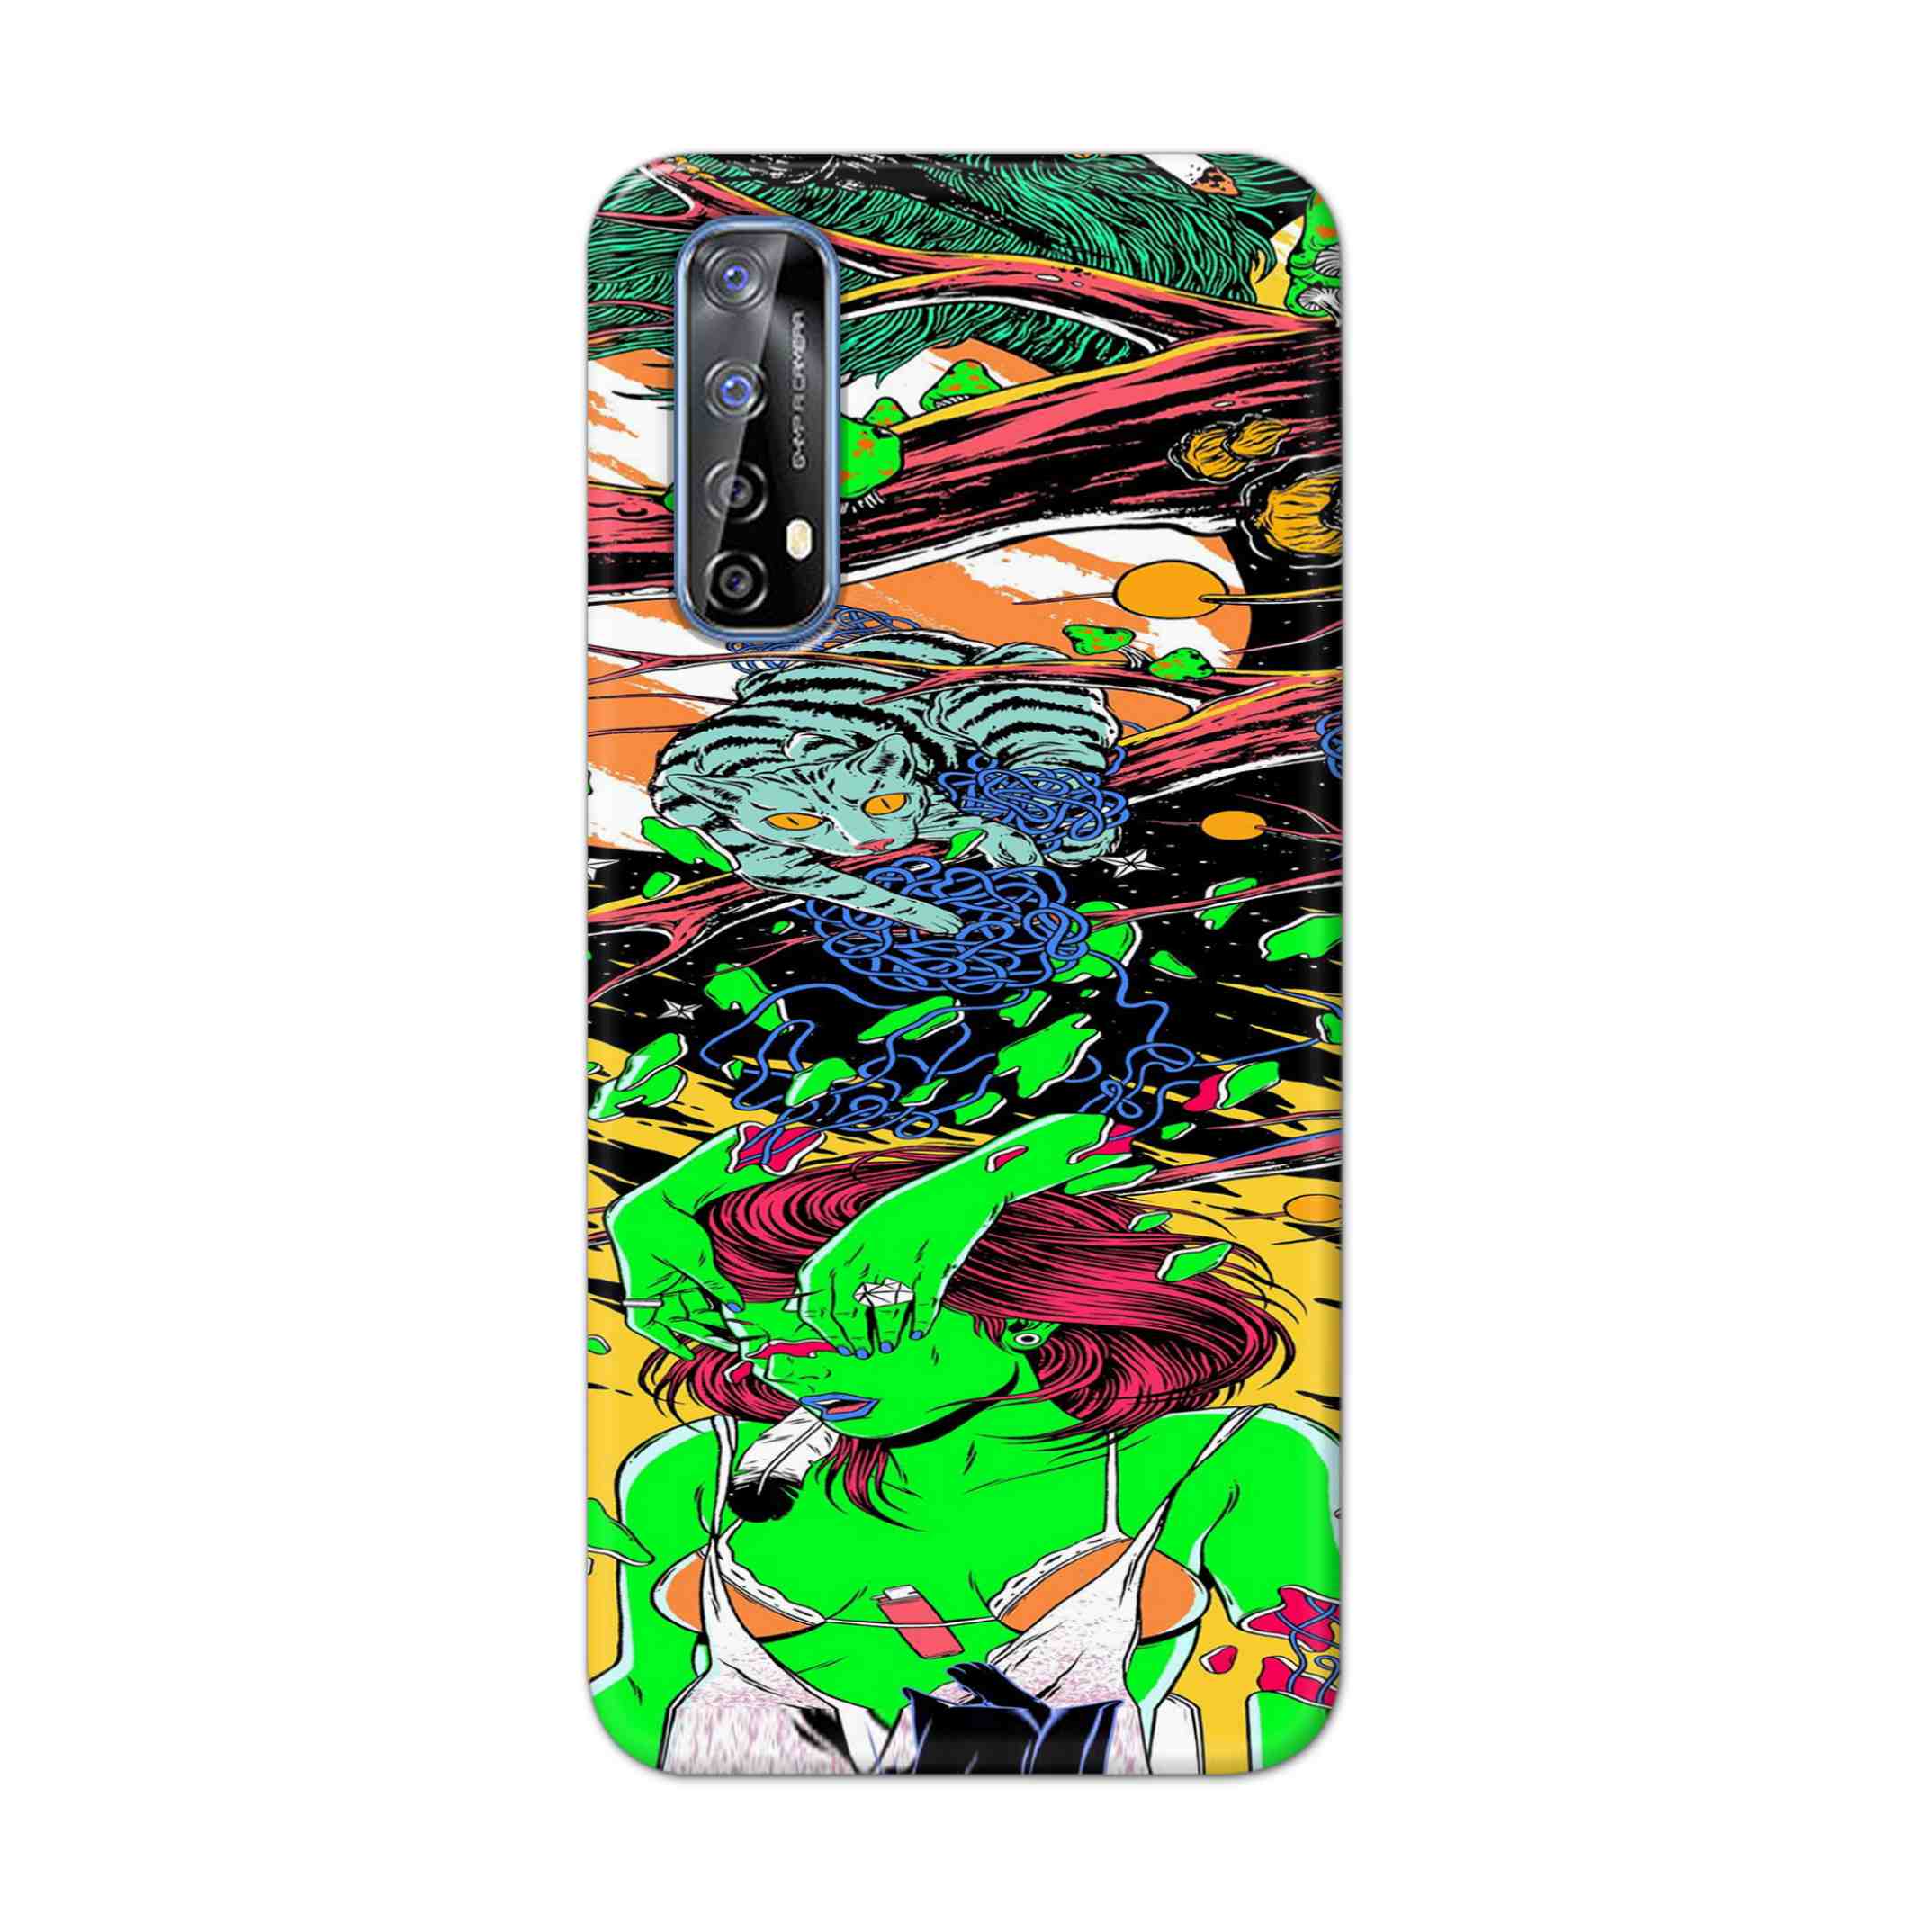 Buy Green Girl Art Hard Back Mobile Phone Case Cover For Realme 7 Online